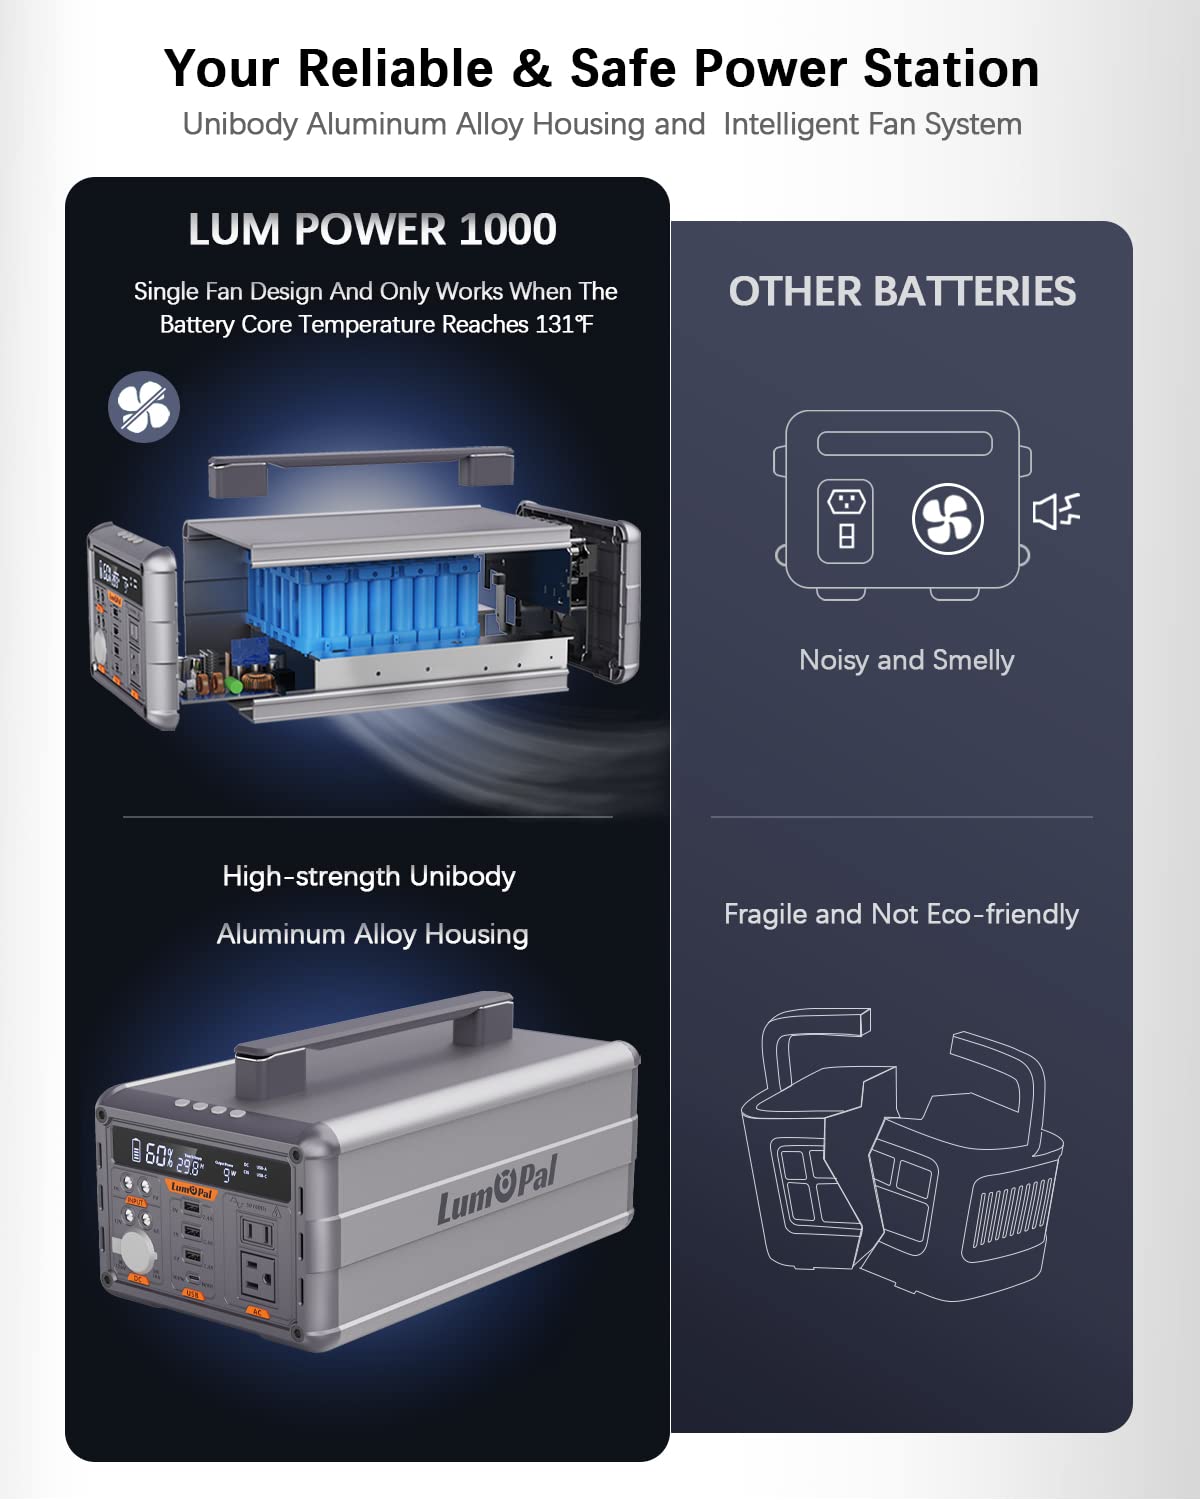 Lum power 1000 portable power station